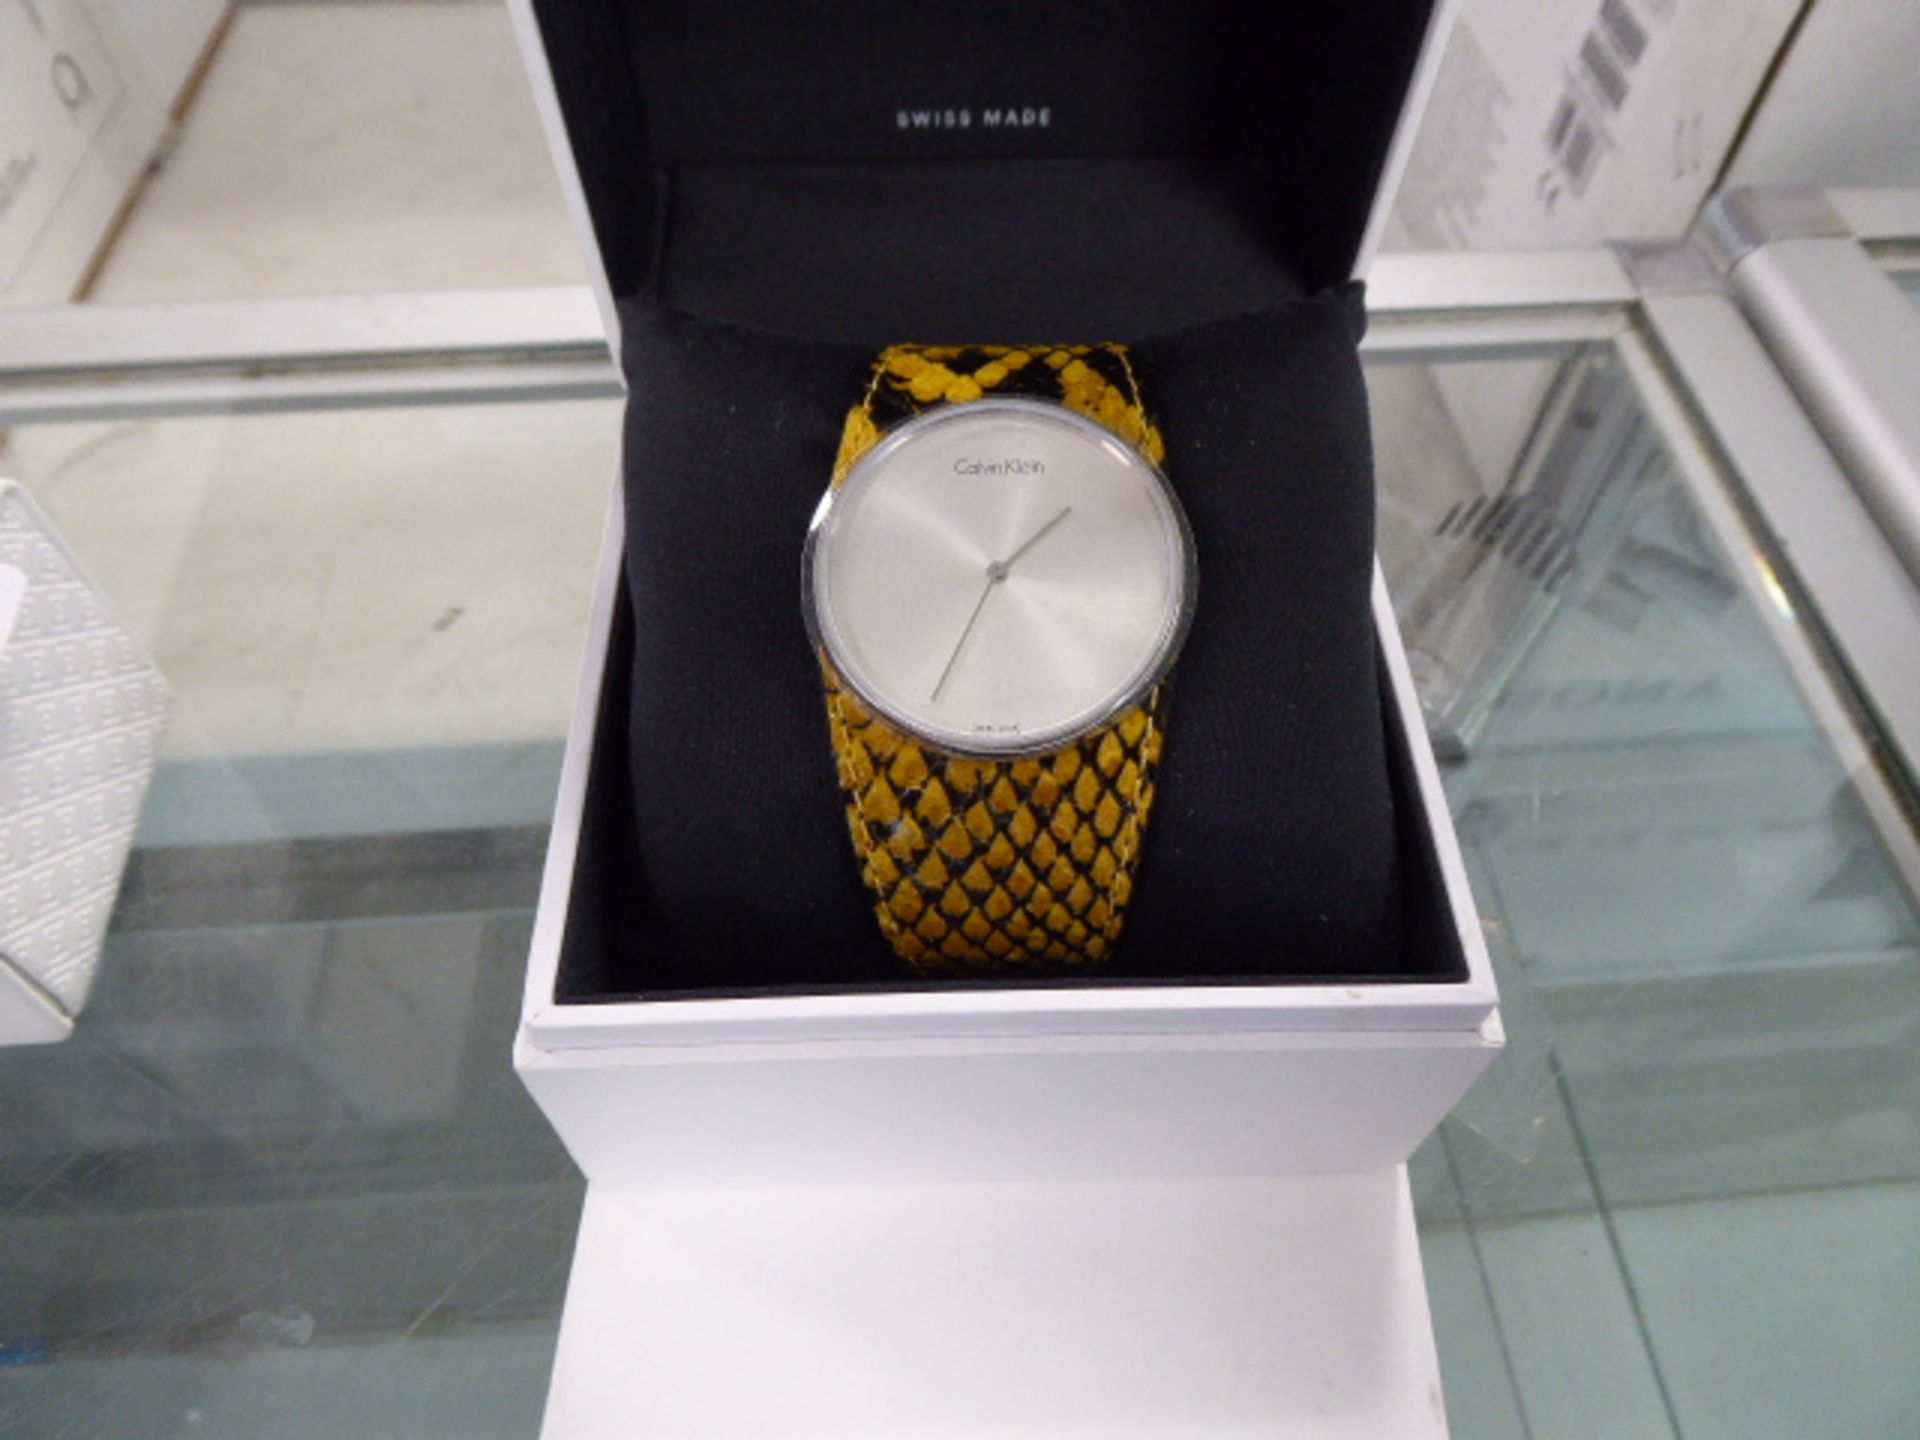 A Calvin Klein wristwatch with box